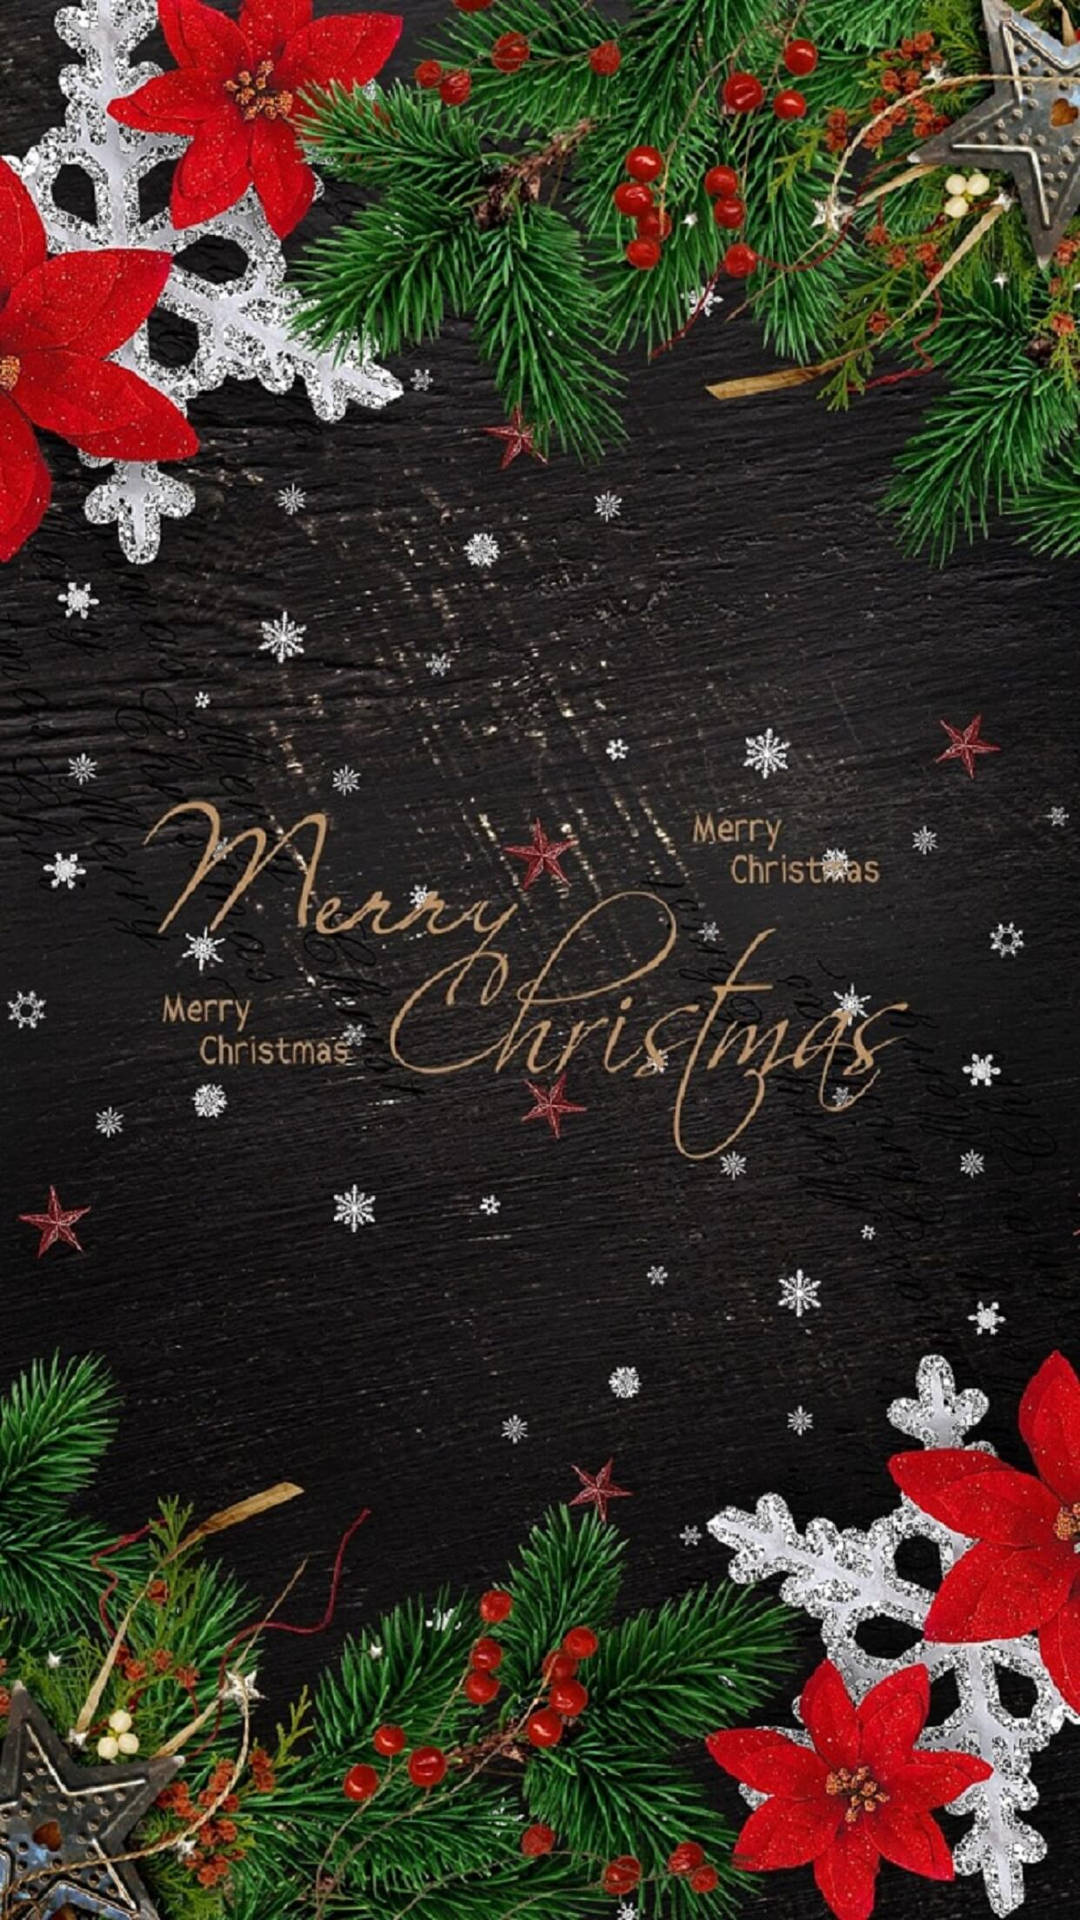 Holiday Greetings Christmas IPhone Wallpaper